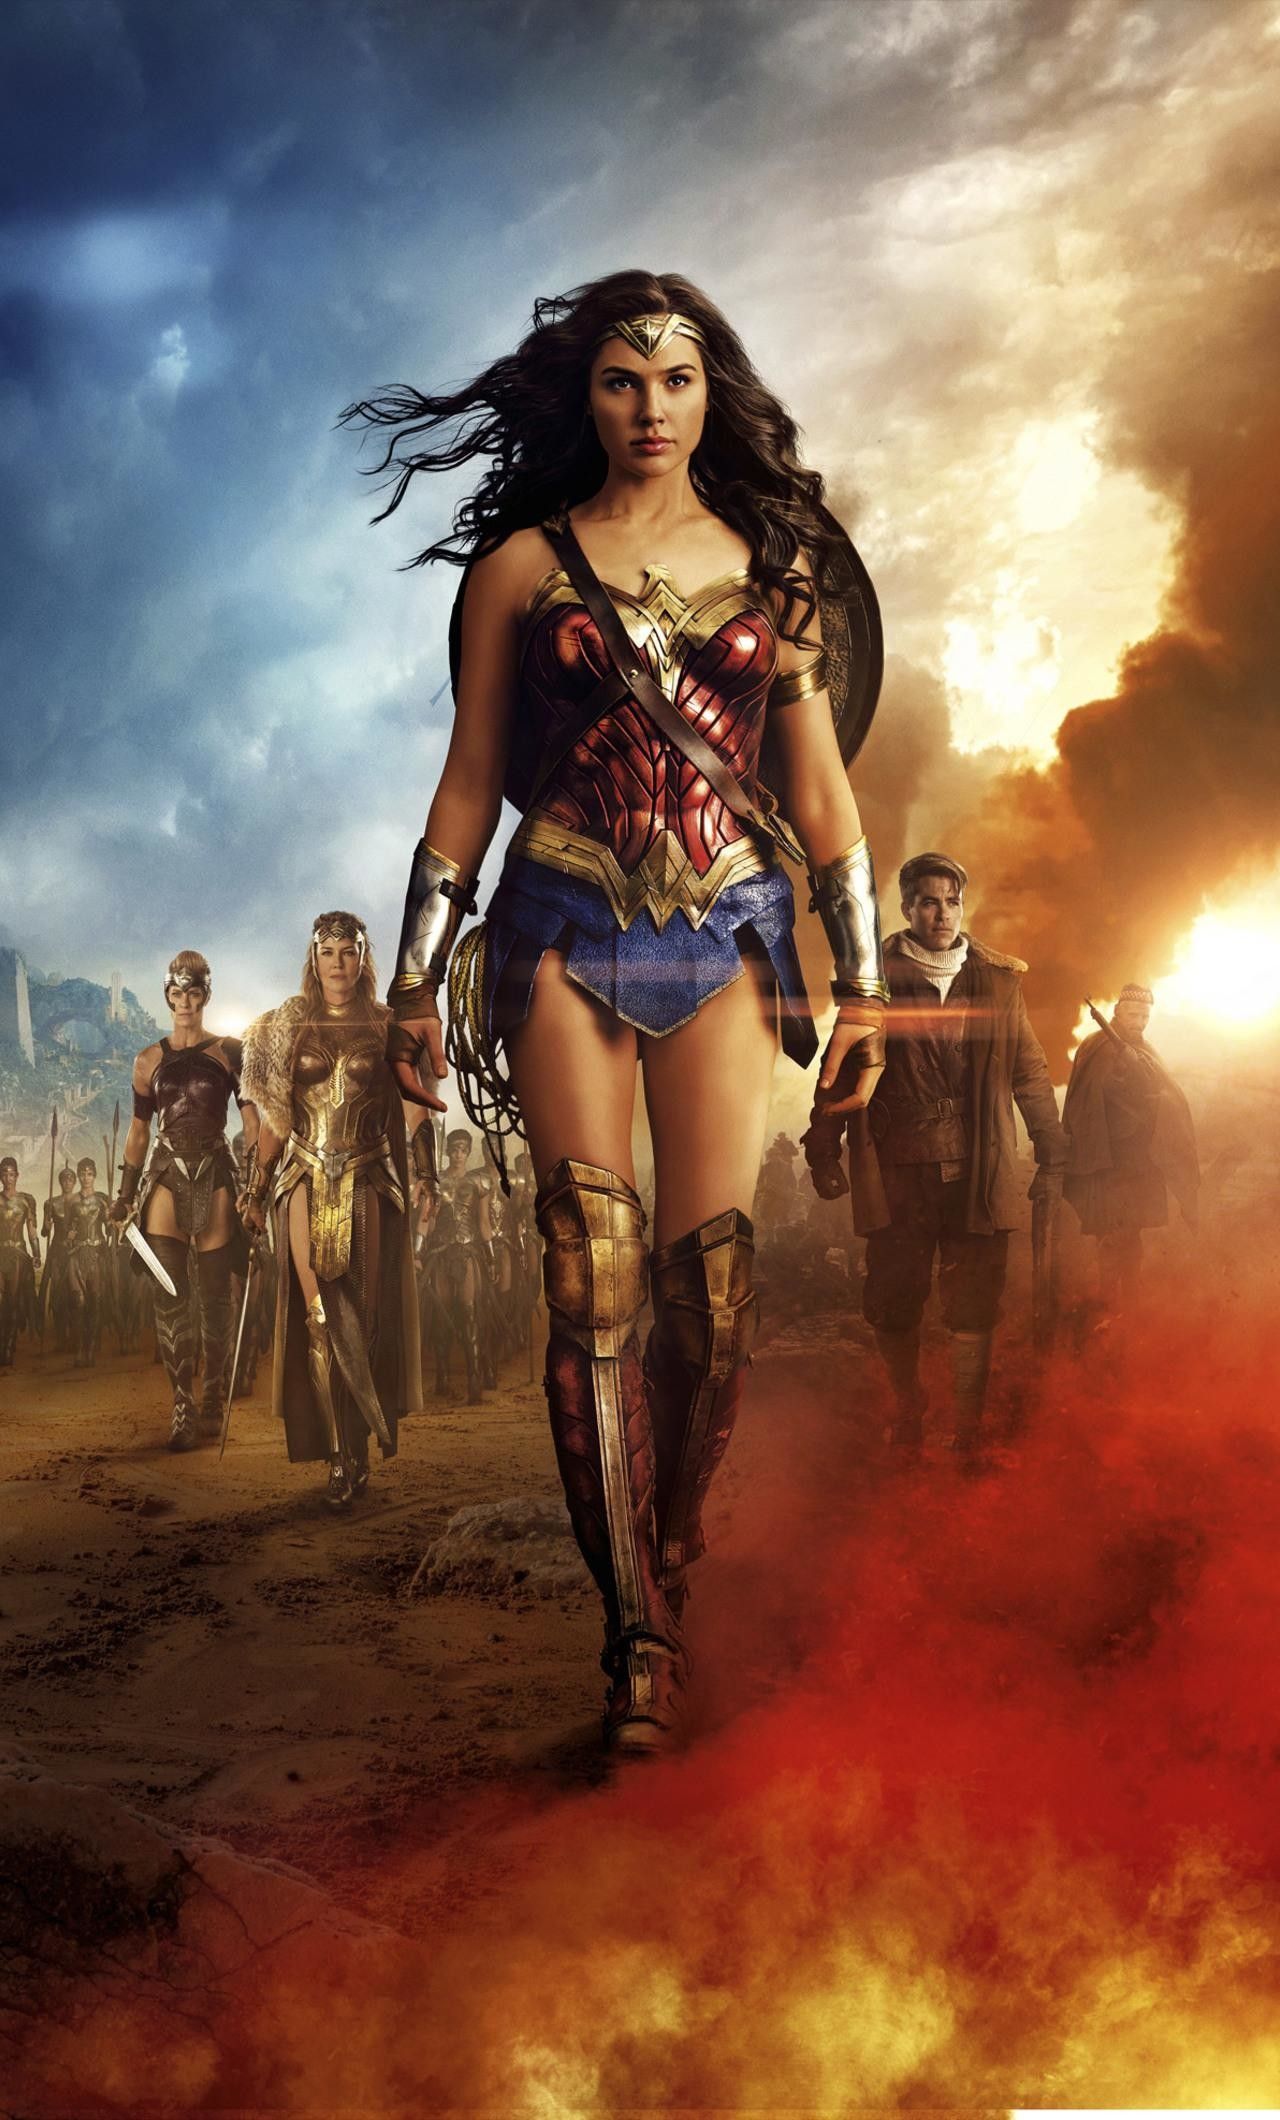 Wonder Woman Wallpaper (best Wonder Woman Wallpaper and image) on WallpaperChat